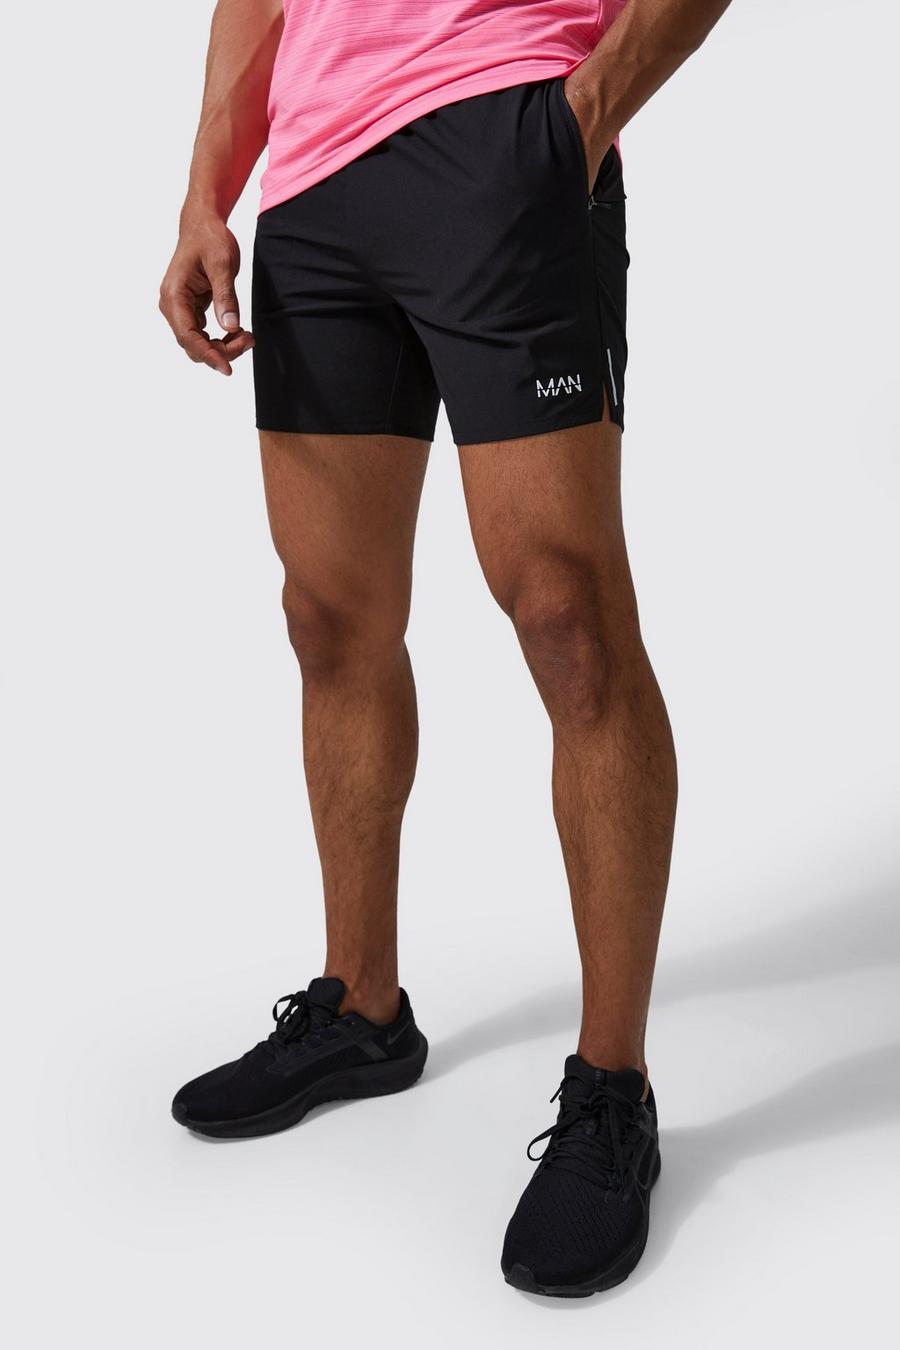 Man Active Lightweight Performance Shorts, Black noir